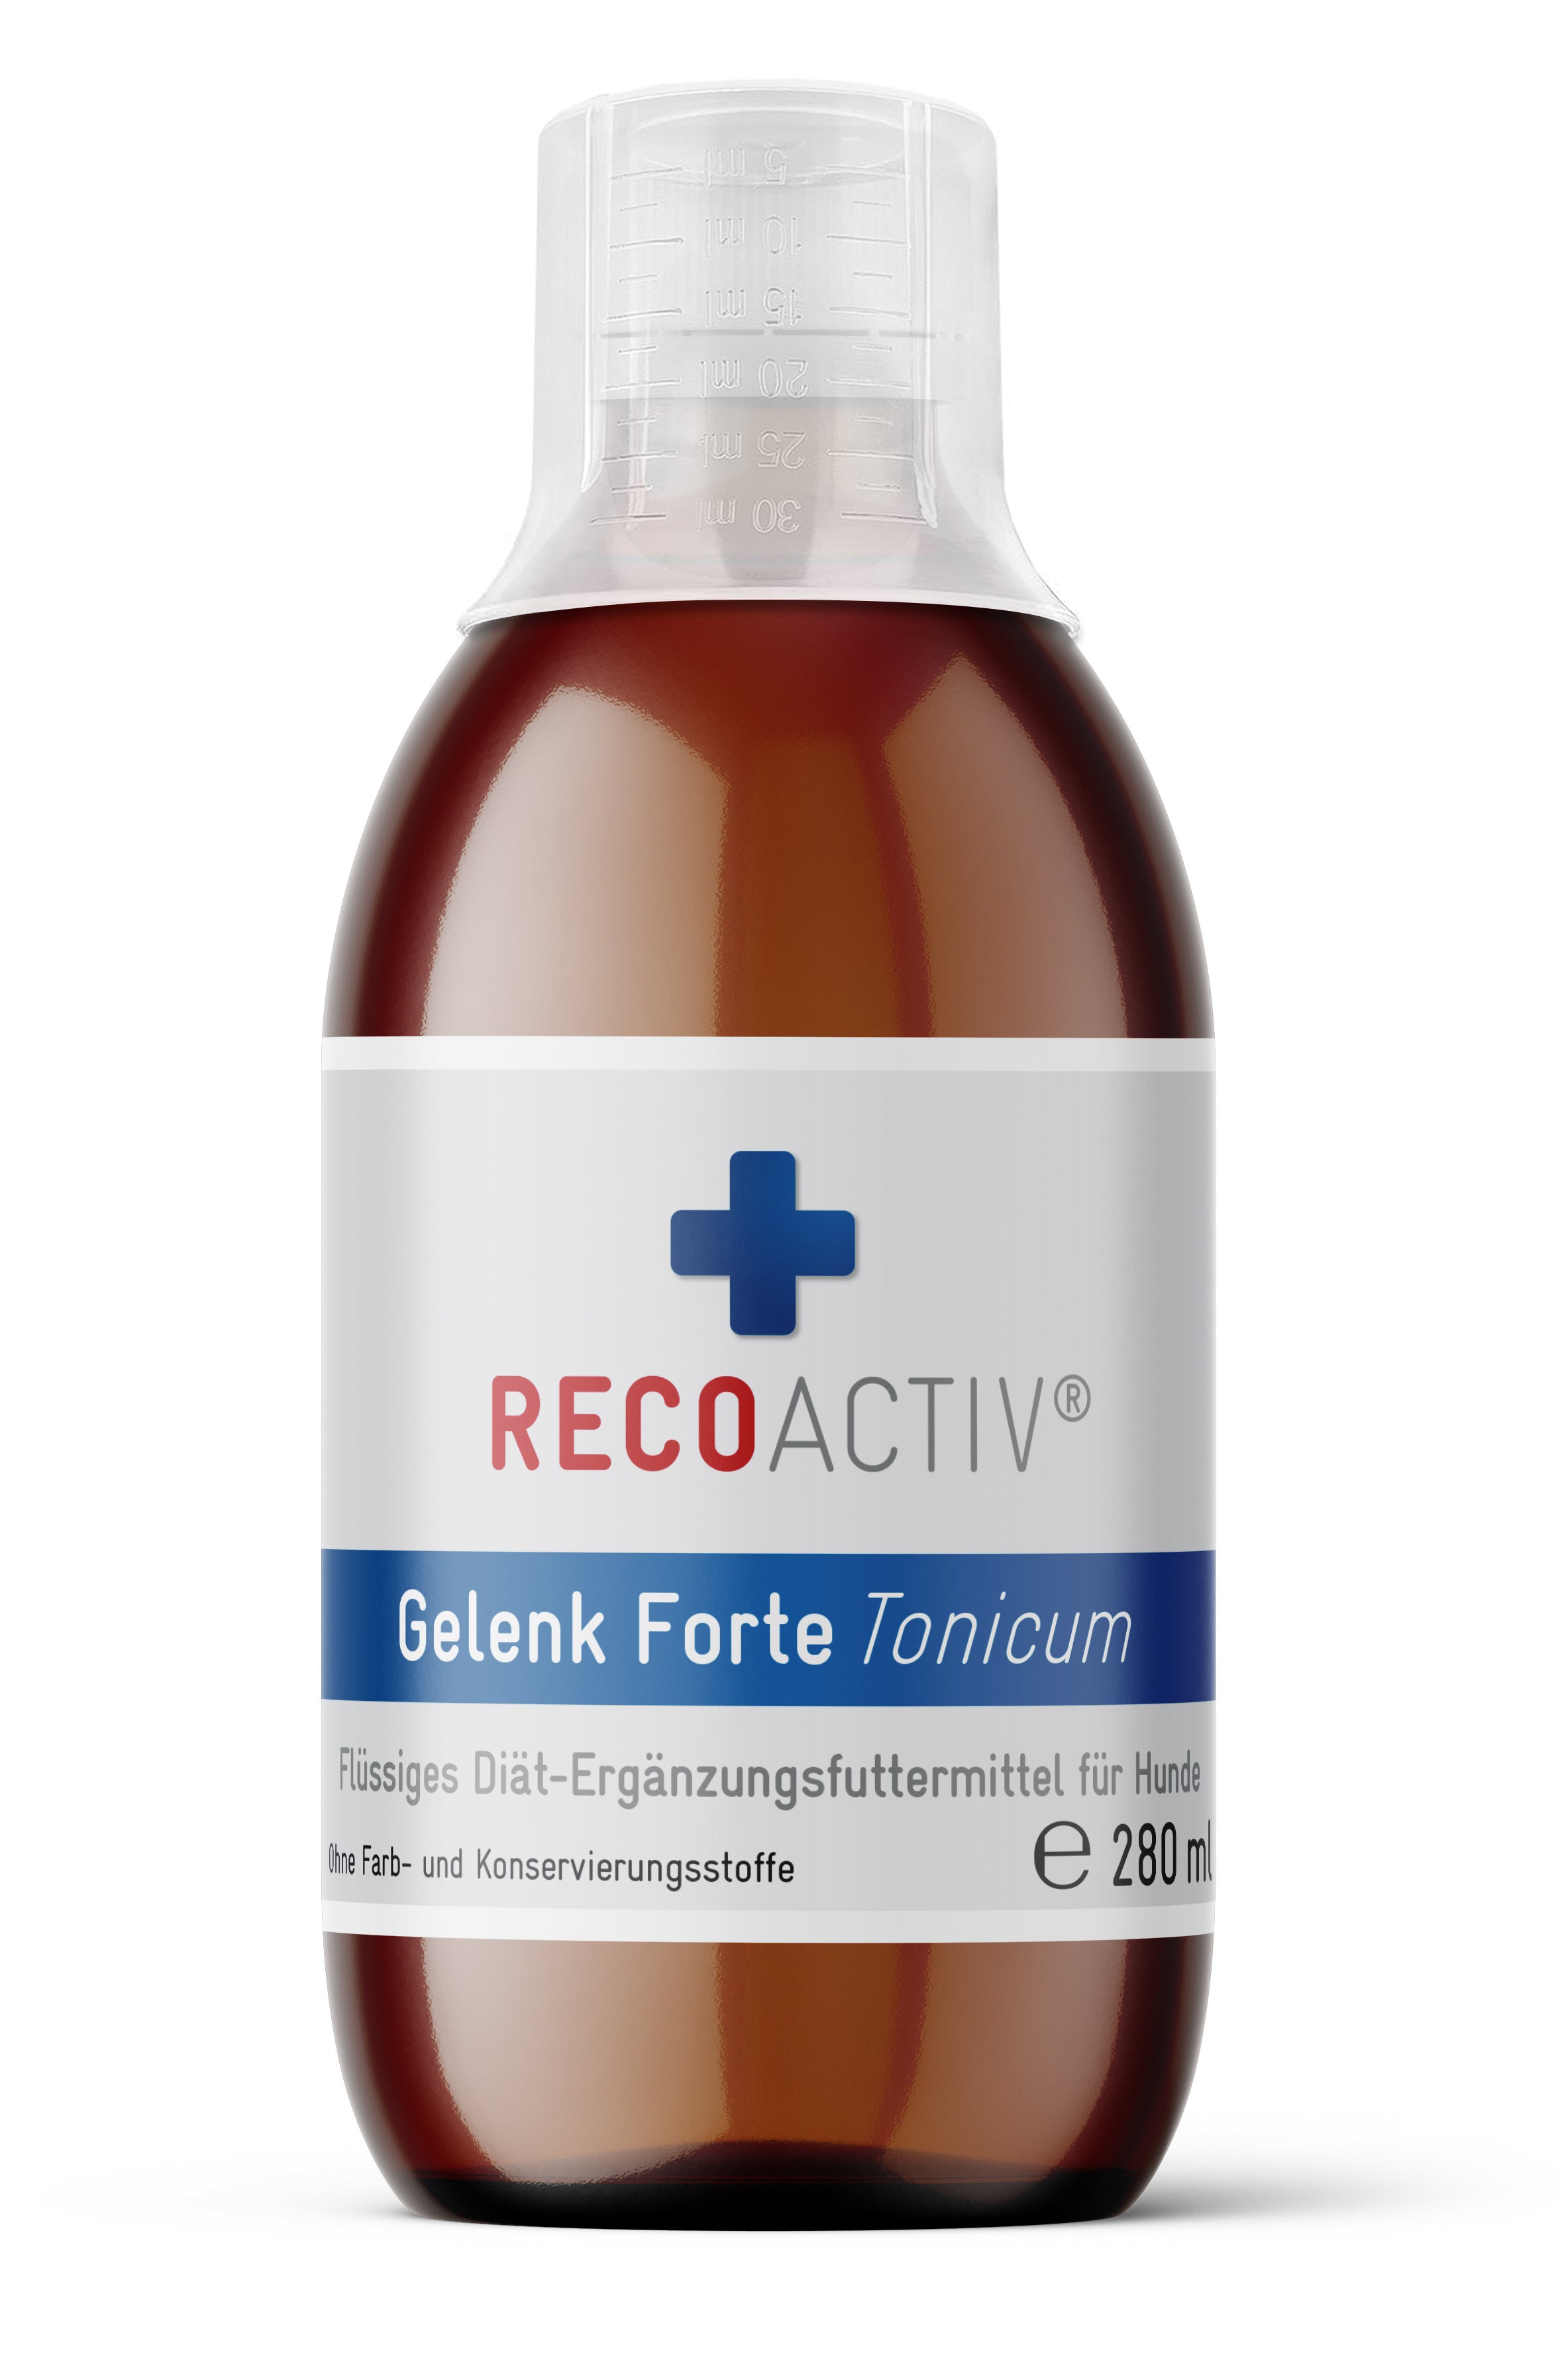 RECOACTIV® Gelenk Tonicum Forte für Hunde mit degenerativen Gelenkerkrankungen